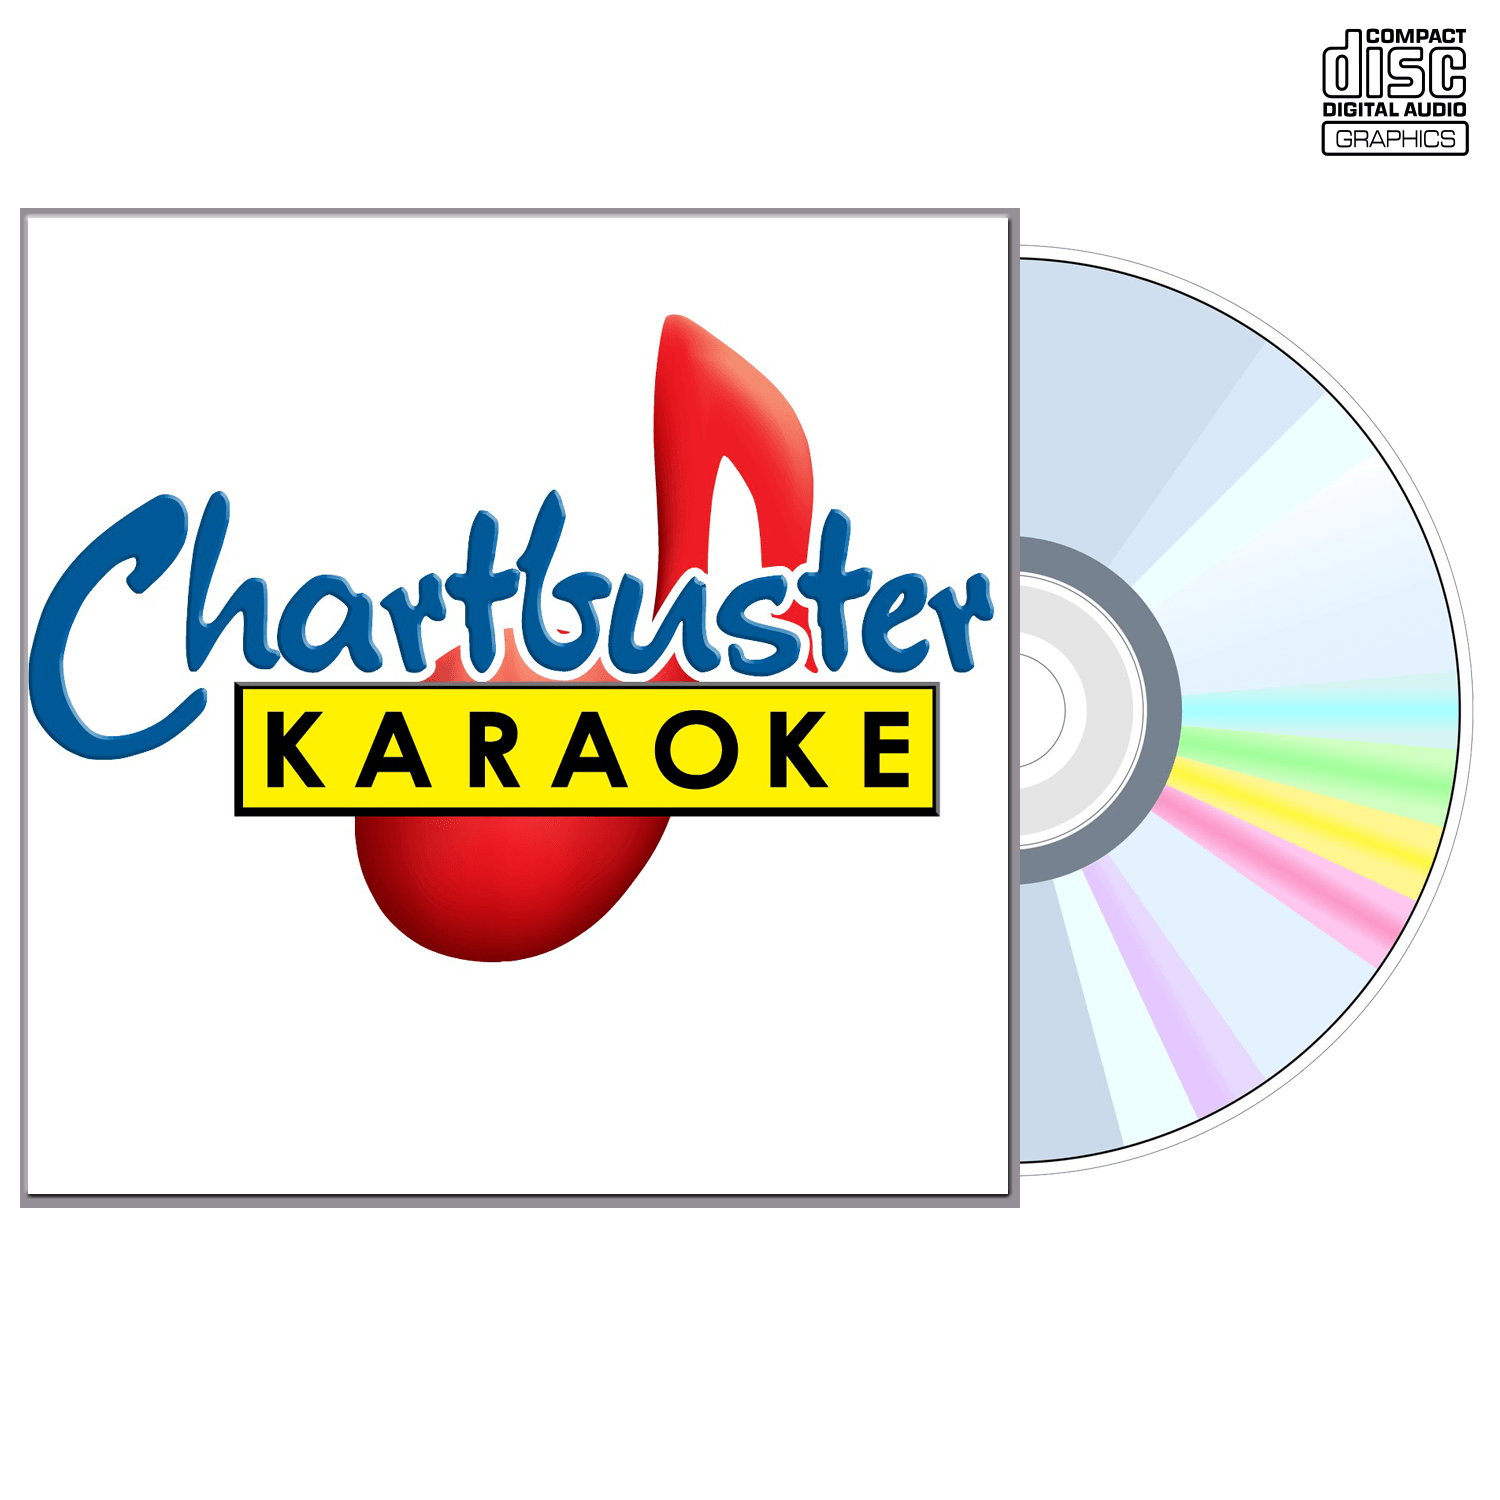 Tom T Hall - CD+G - Chartbuster Karaoke - Karaoke Home Entertainment